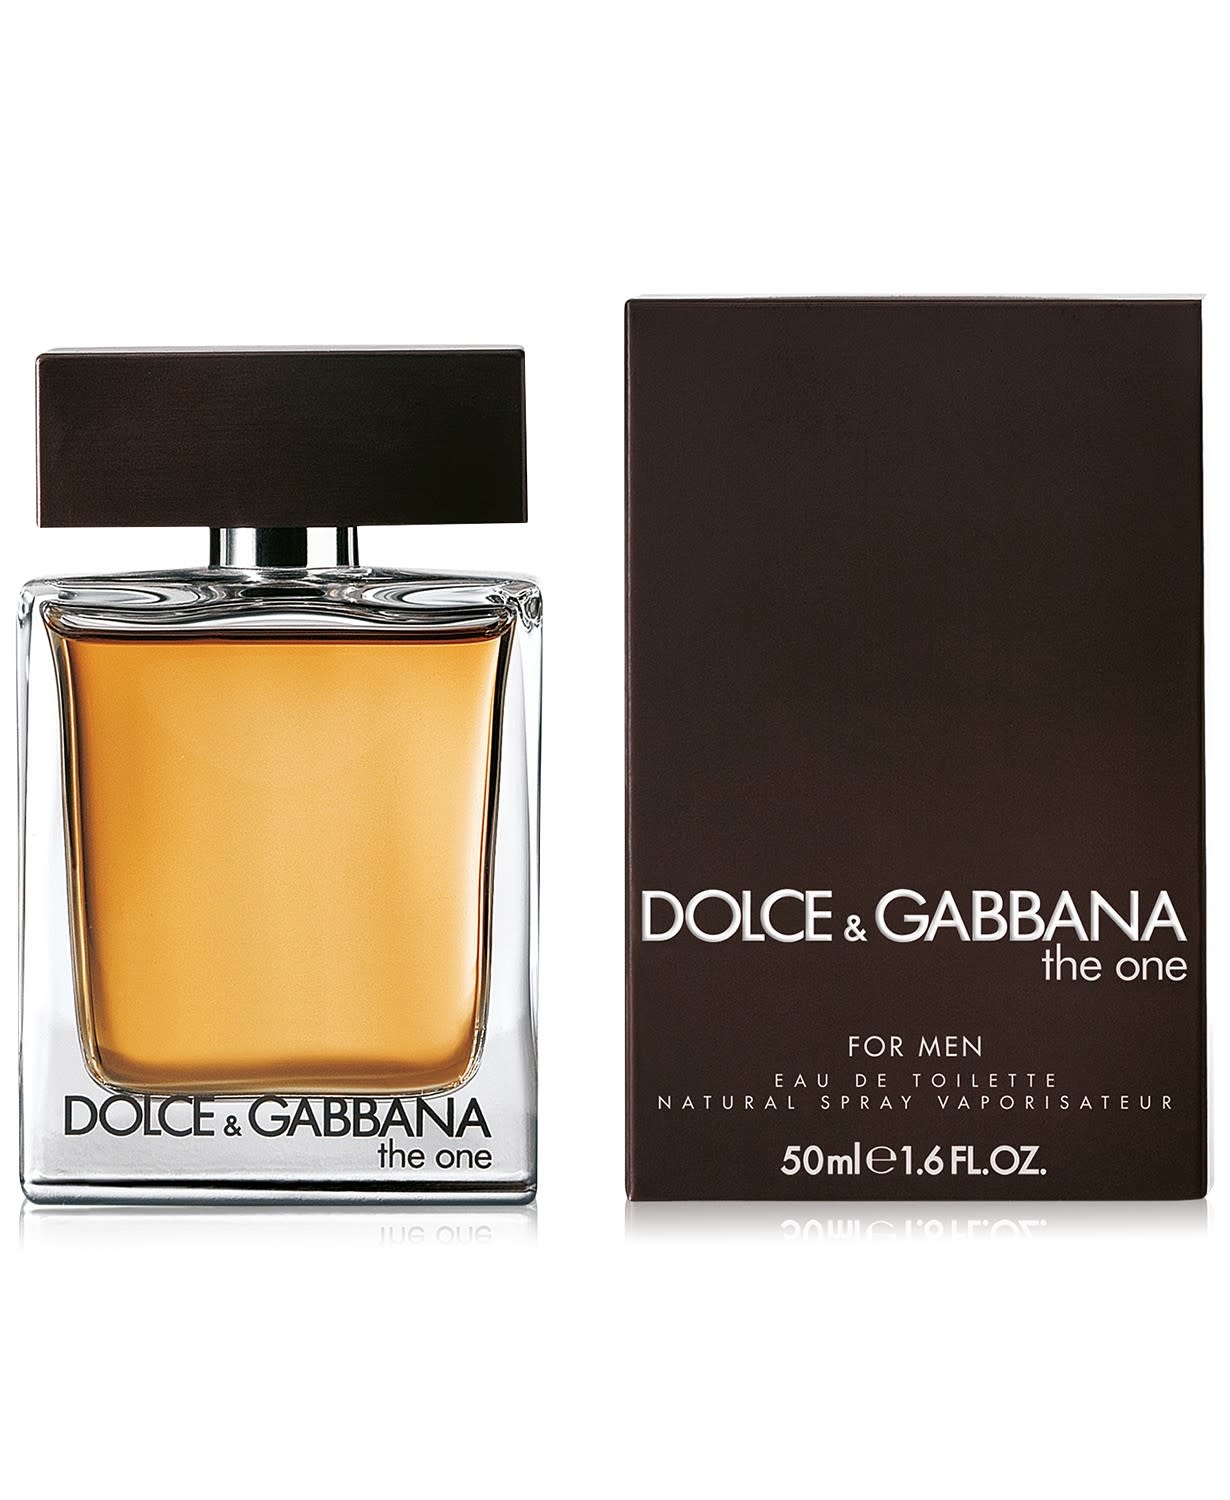 Дольче габбана мужские кинг. Dolce&Gabbana the one for men Toilette 100 ml. Dolce Gabbana the one for men 100 мл. Дольче Габбана the one 100ml. Dolce Gabbana the one for men 100ml EDT.